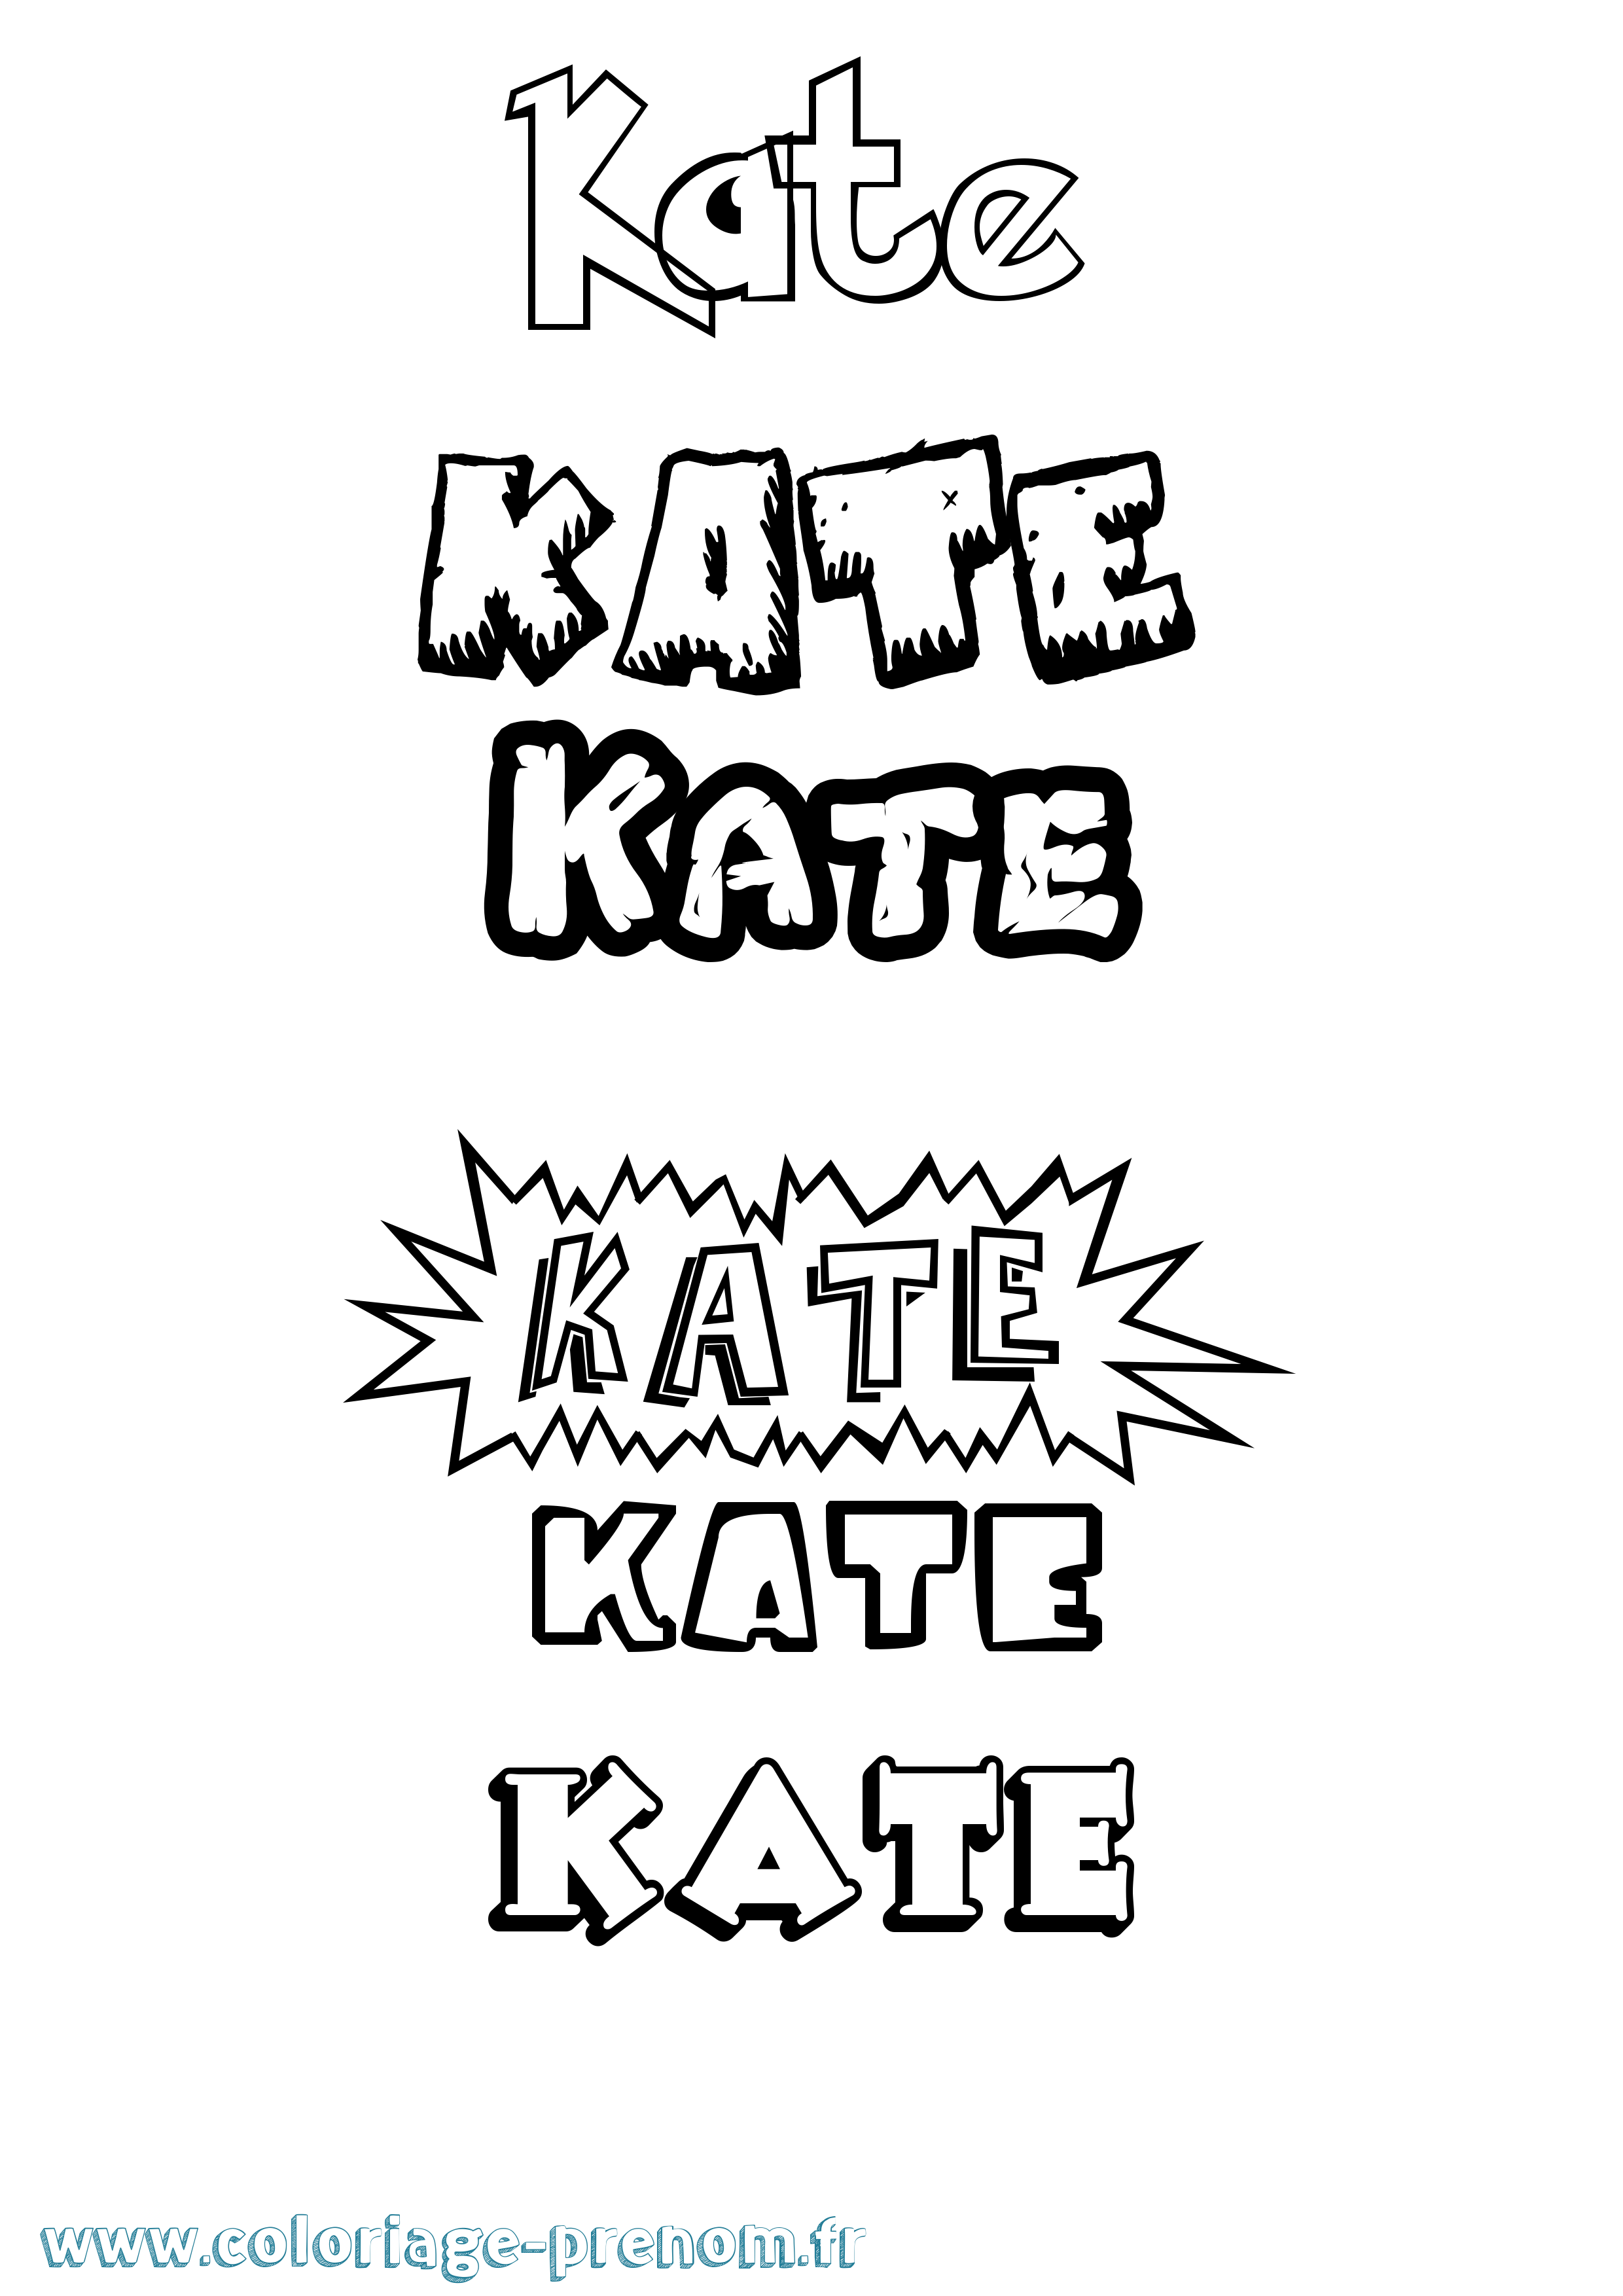 Coloriage prénom Kate